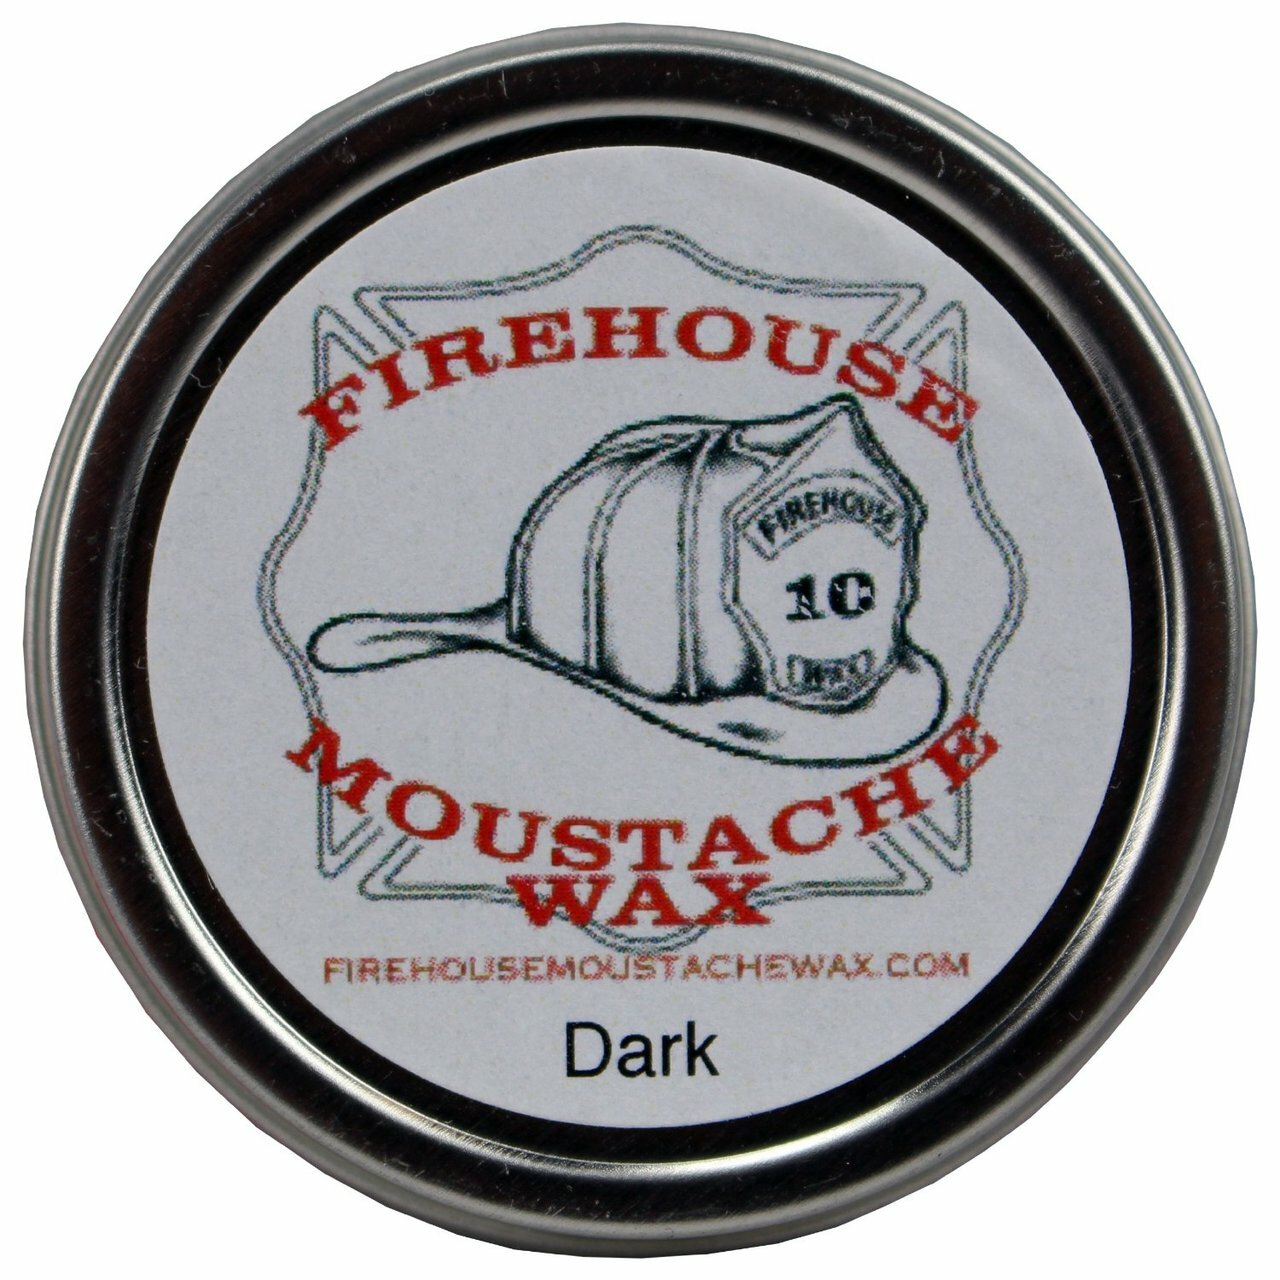 Firehouse-Moustache Dark Wax